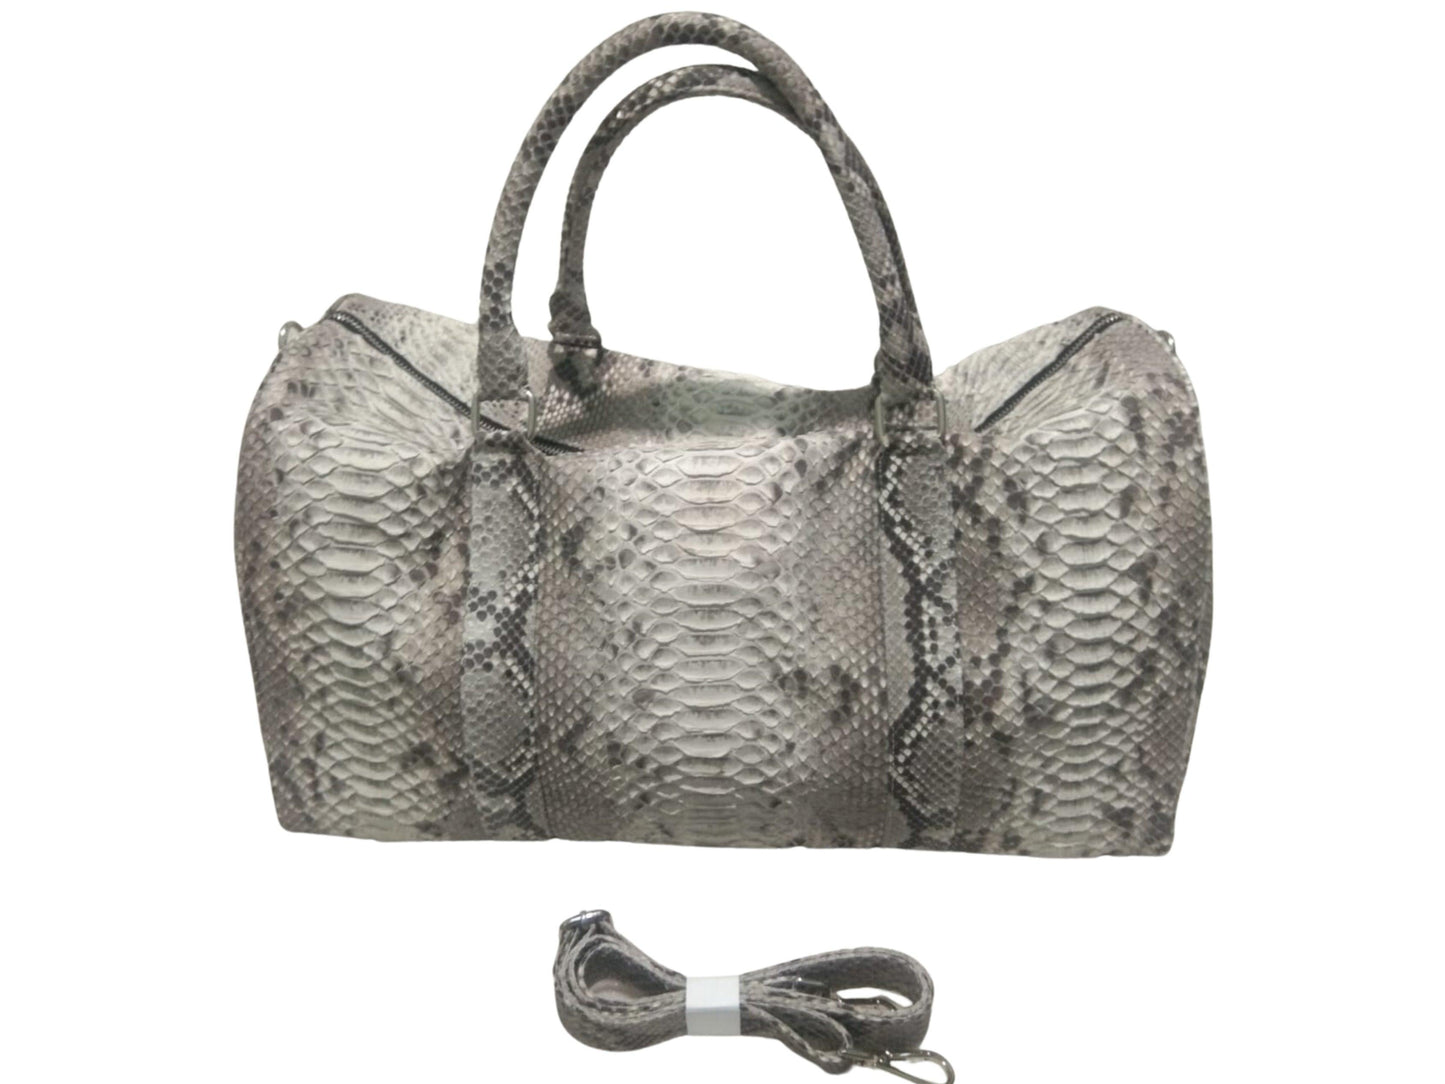 Snakeskin Weekender Bag Grey Python Jacket by LFM Fashion